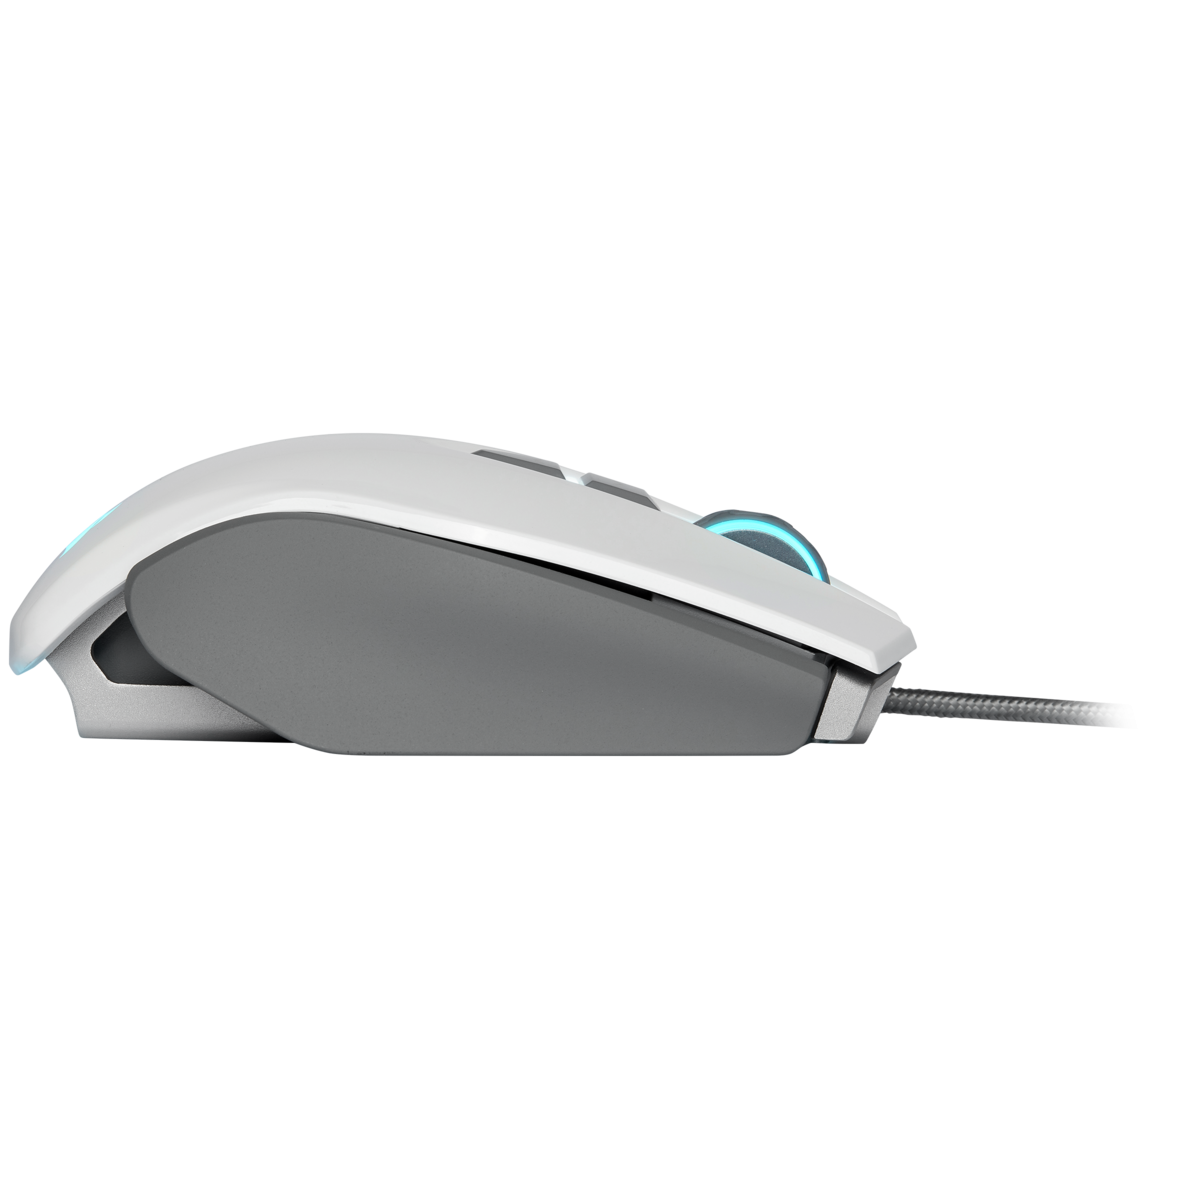 Mouse Corsair Gamer M65 RGB ELITE, 18.000DPI, 8 Botões Programáveis, White, CH-9309111-NA